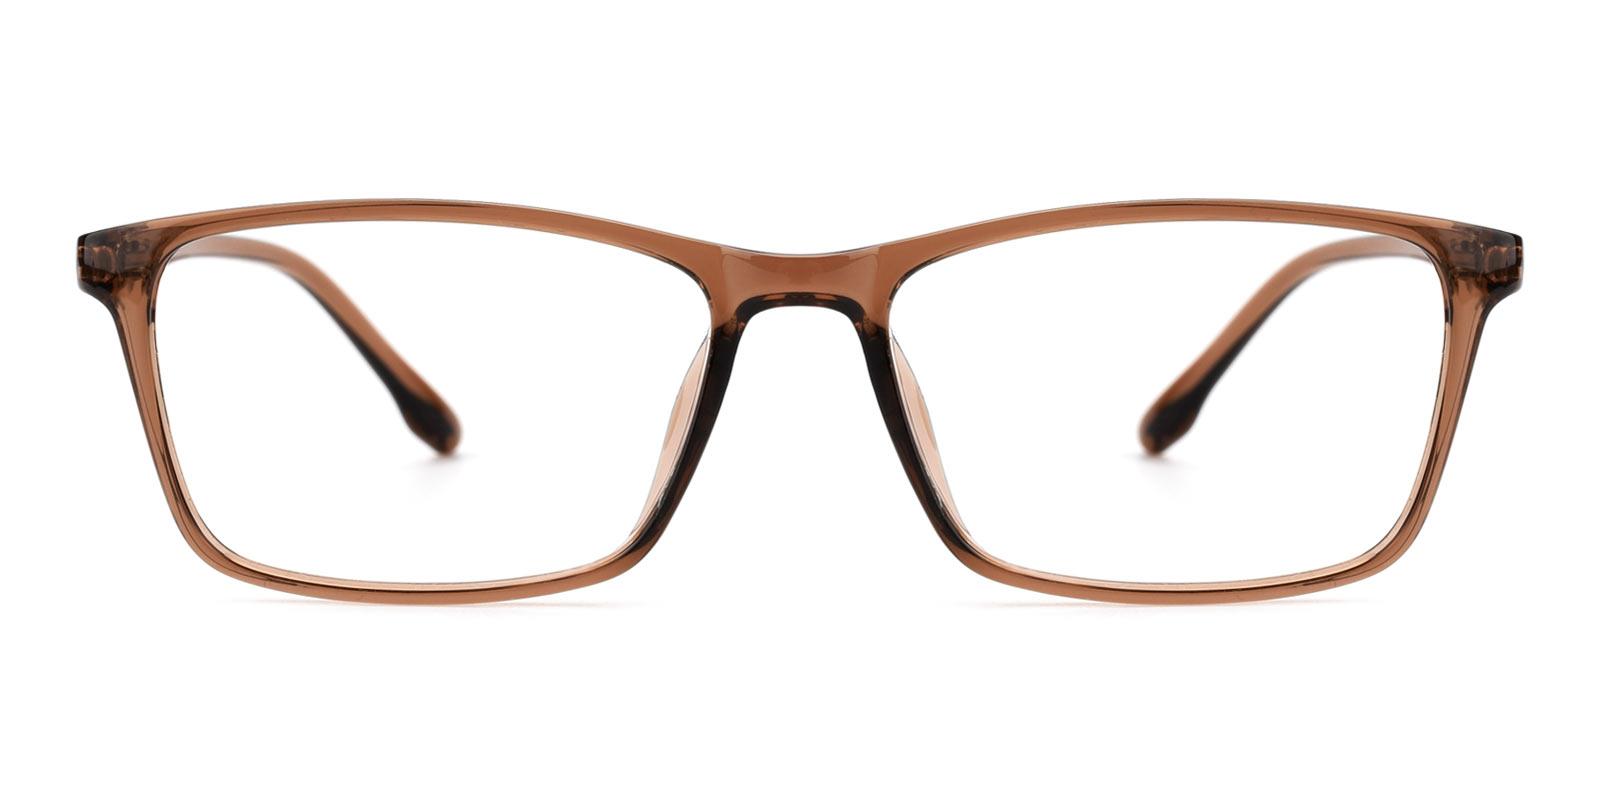 Jacob-Brown-Rectangle-TR-Eyeglasses-detail